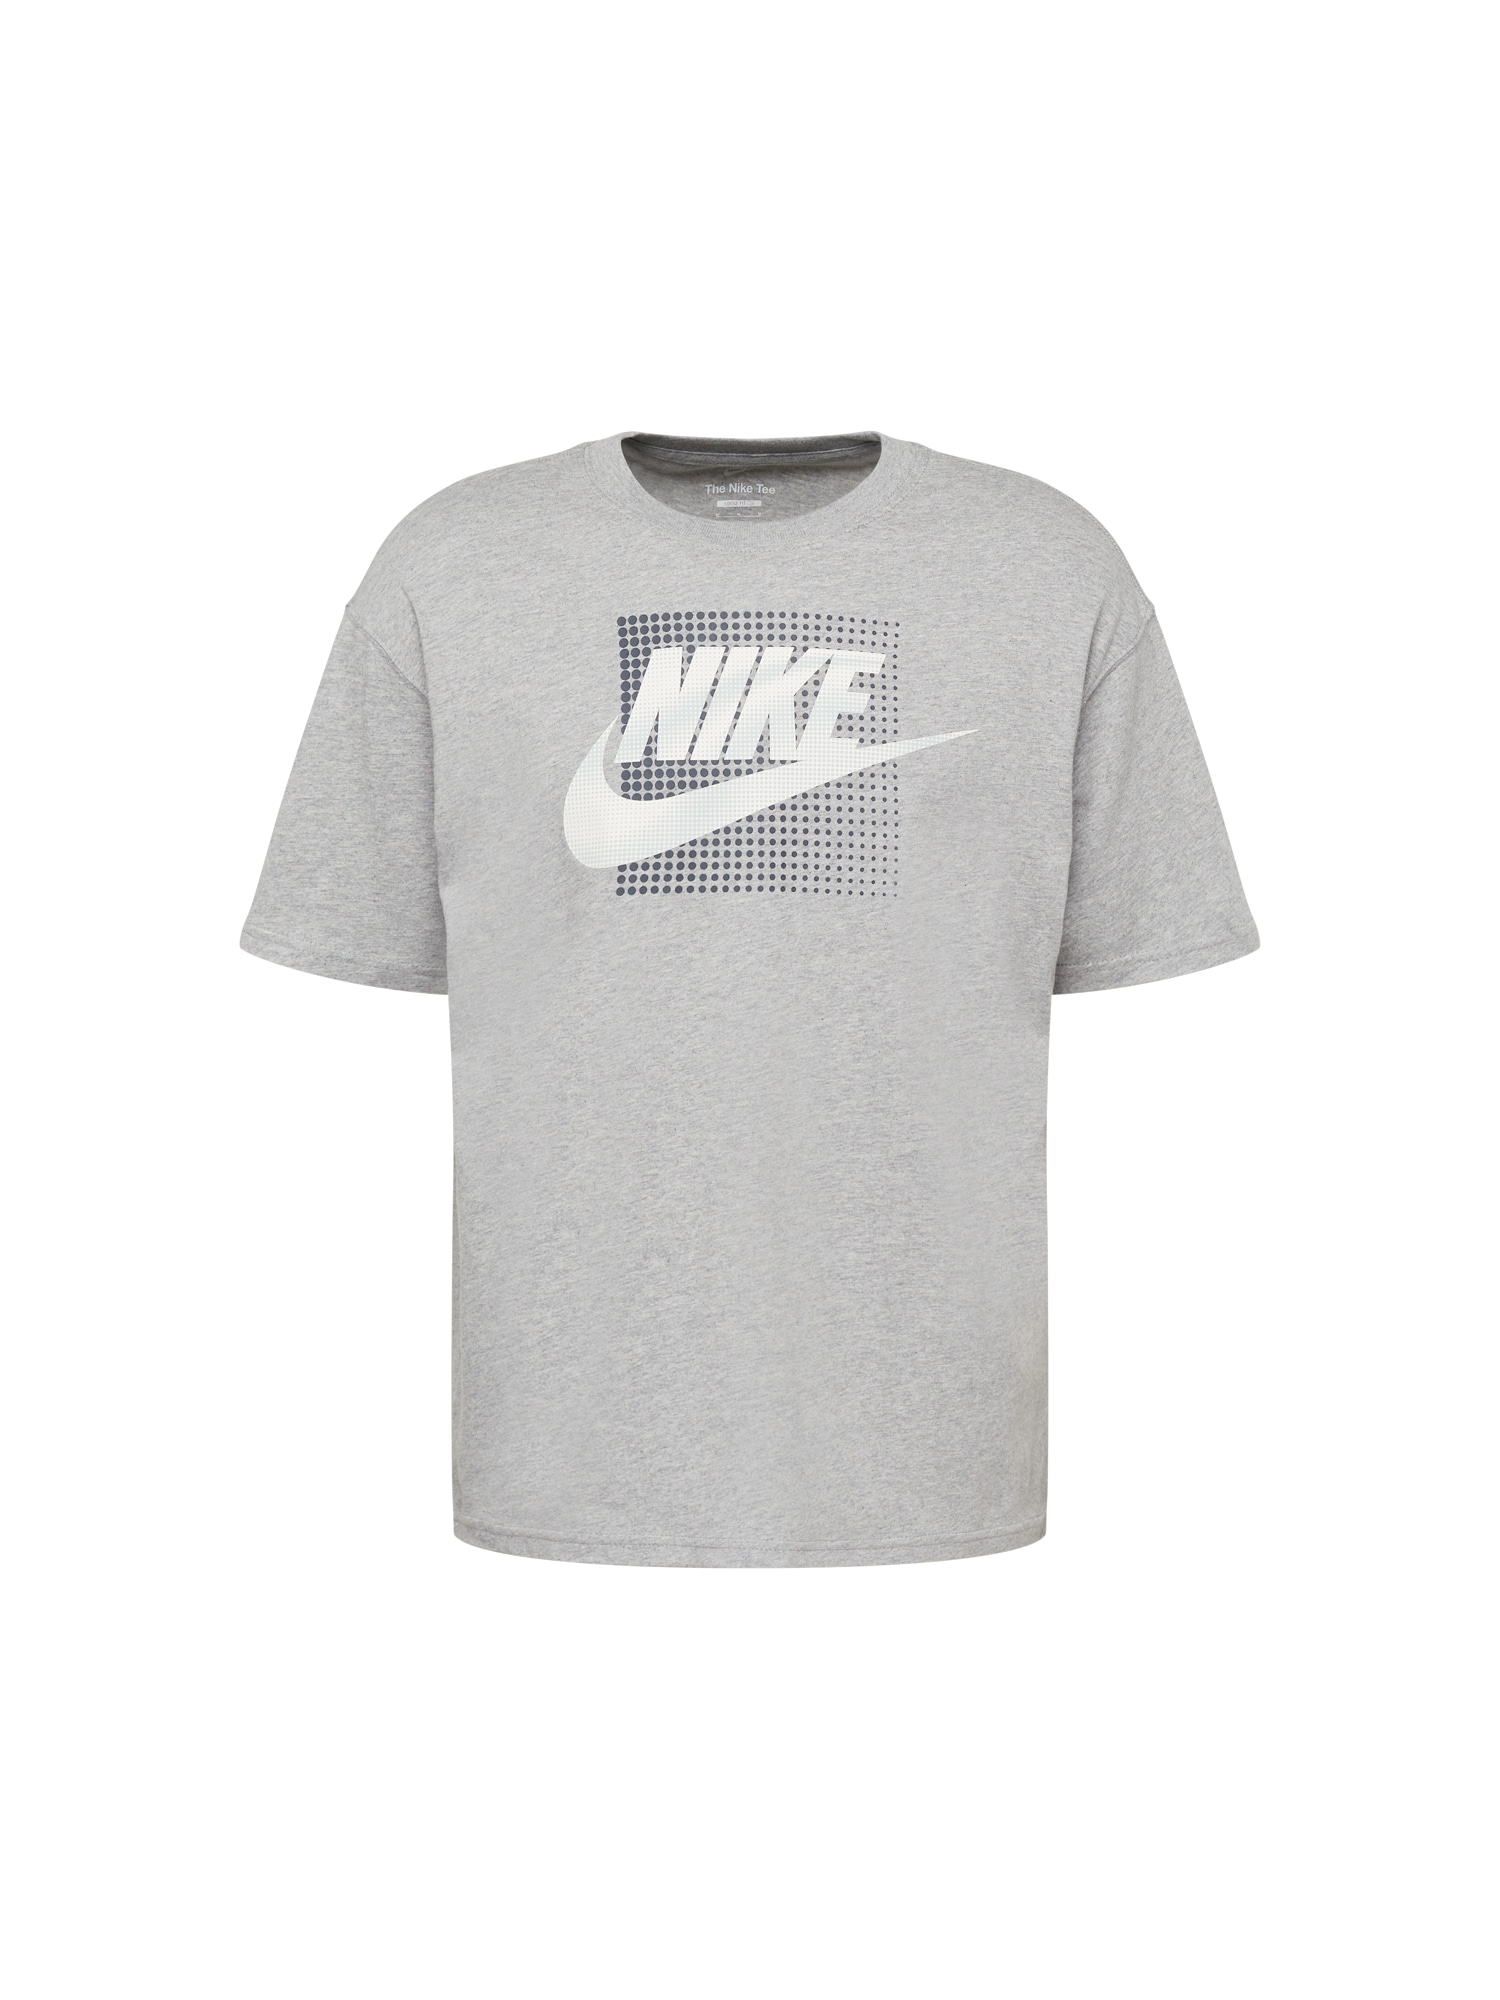 Nike Sportswear Majica  temno siva / pegasto siva / bela